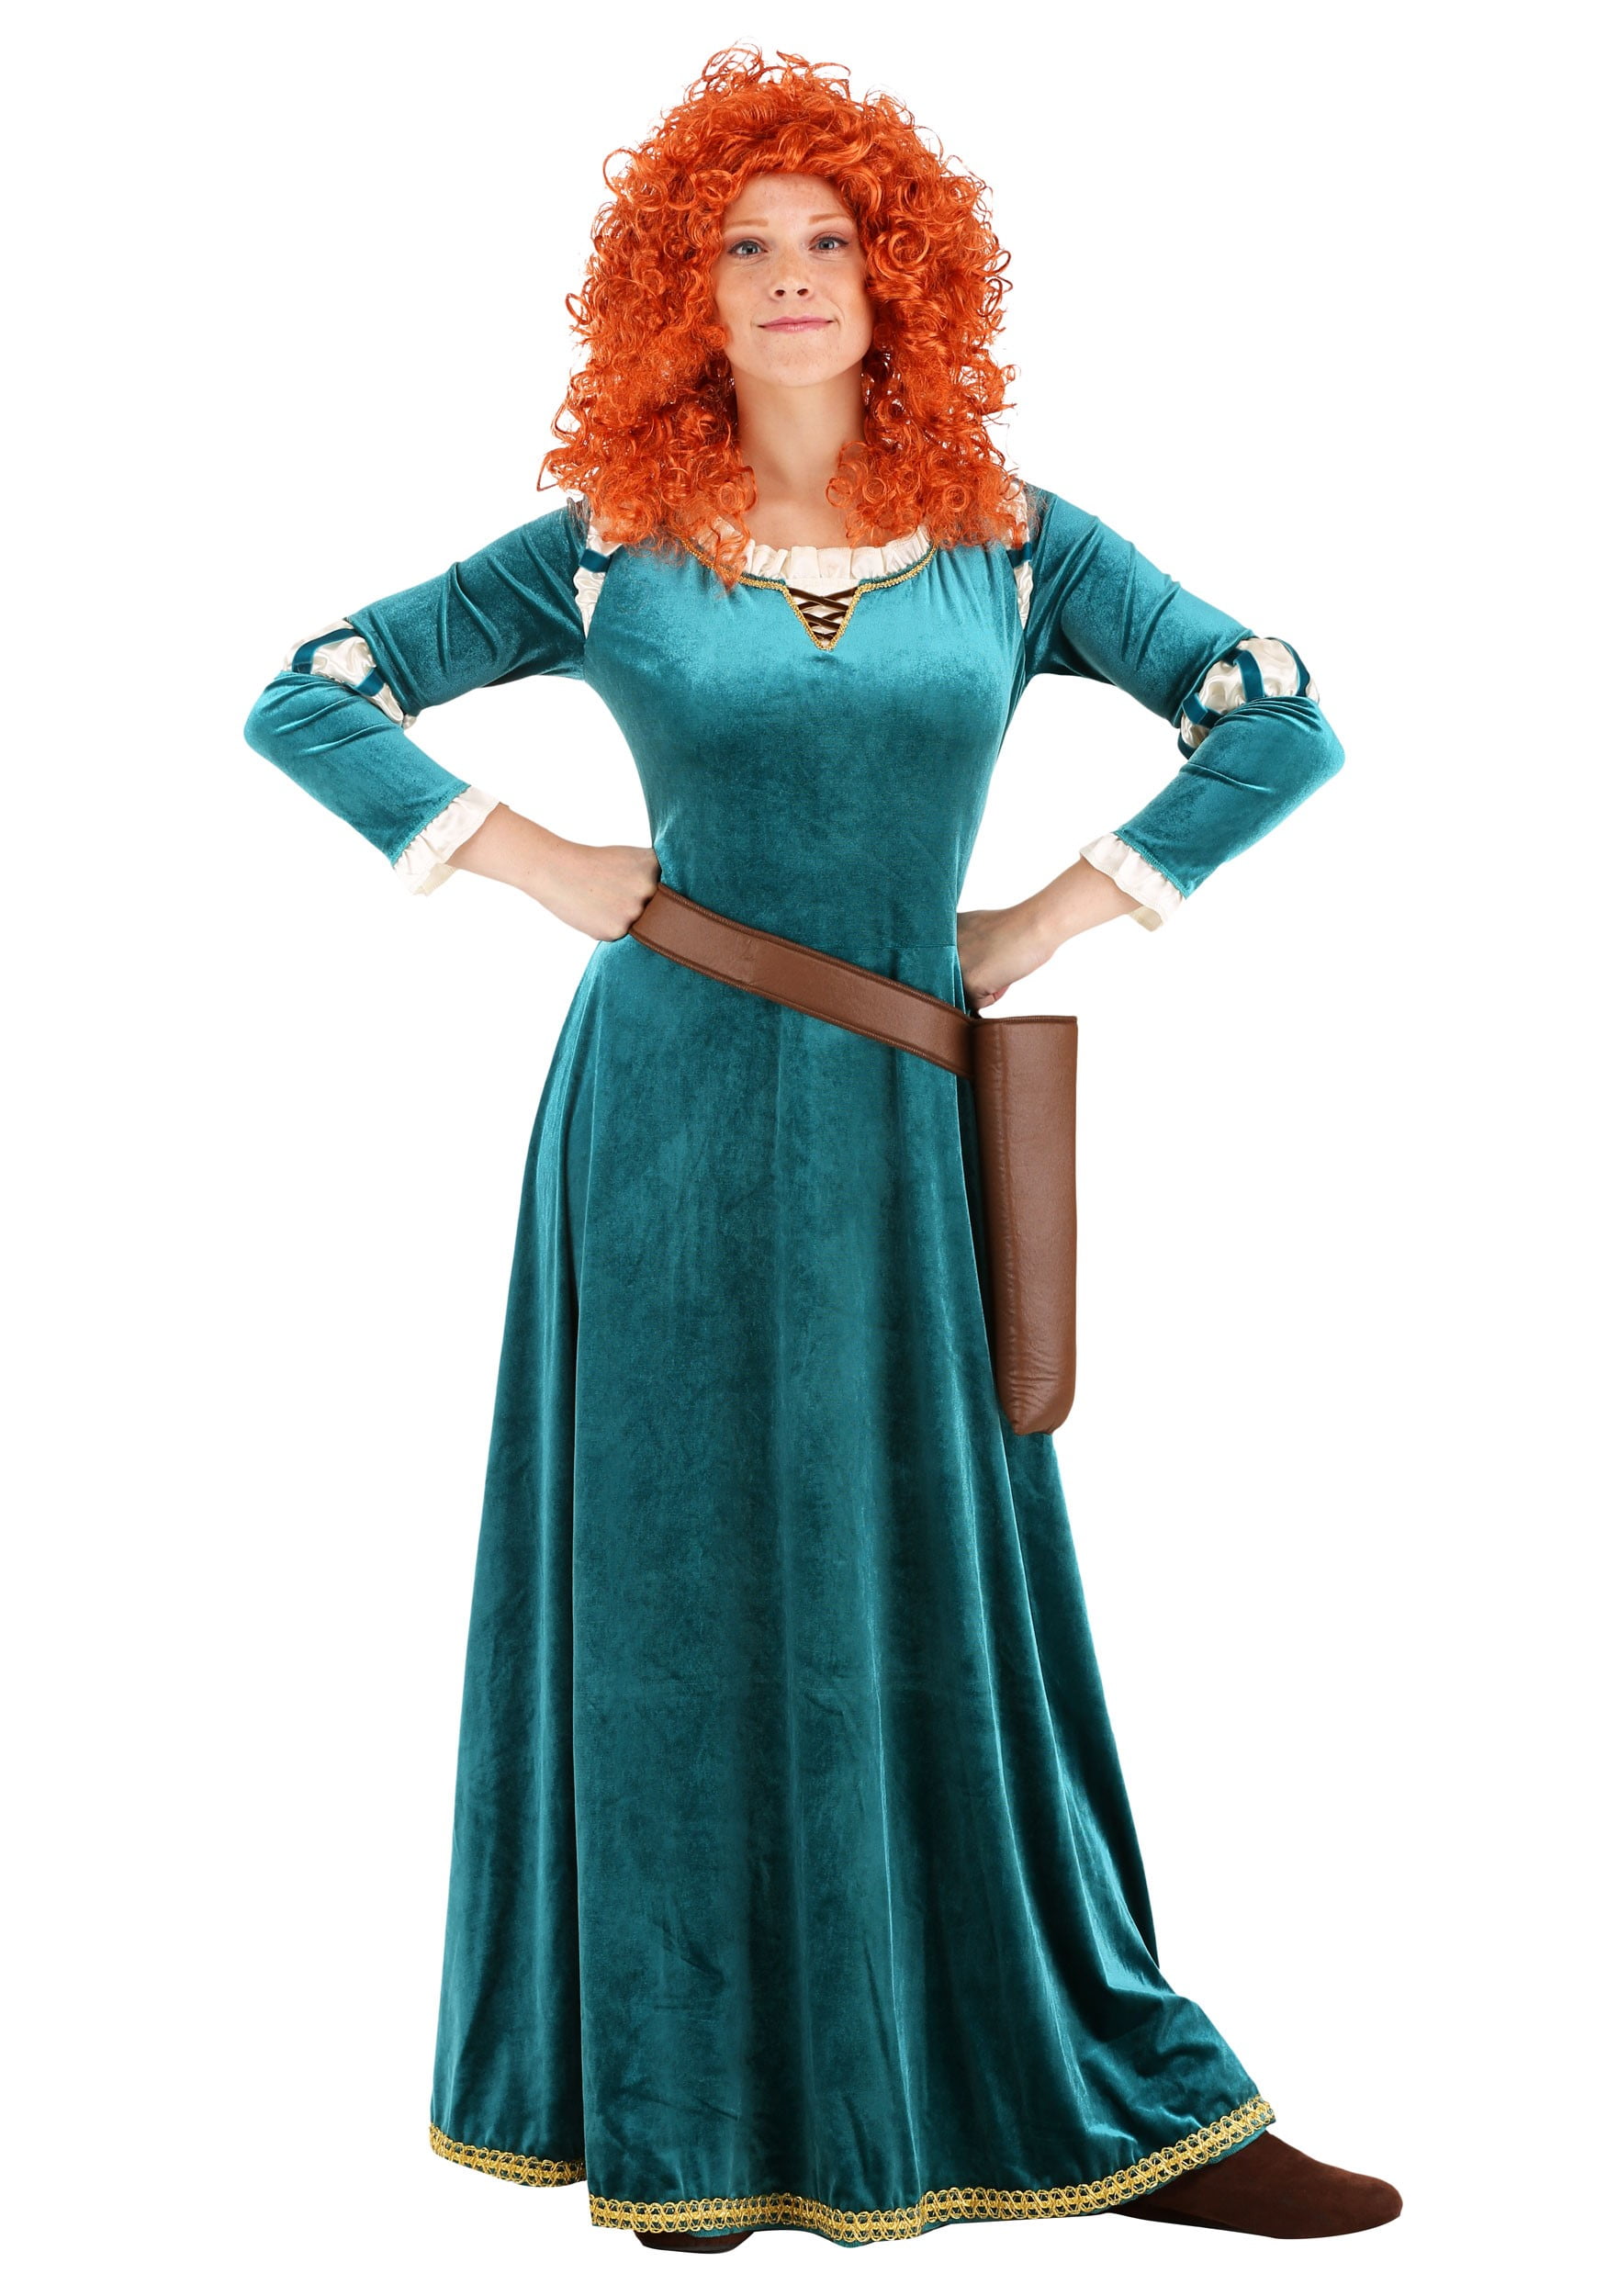 Disney Store Princess Brave Costume Merida Girl Dress Shoes 